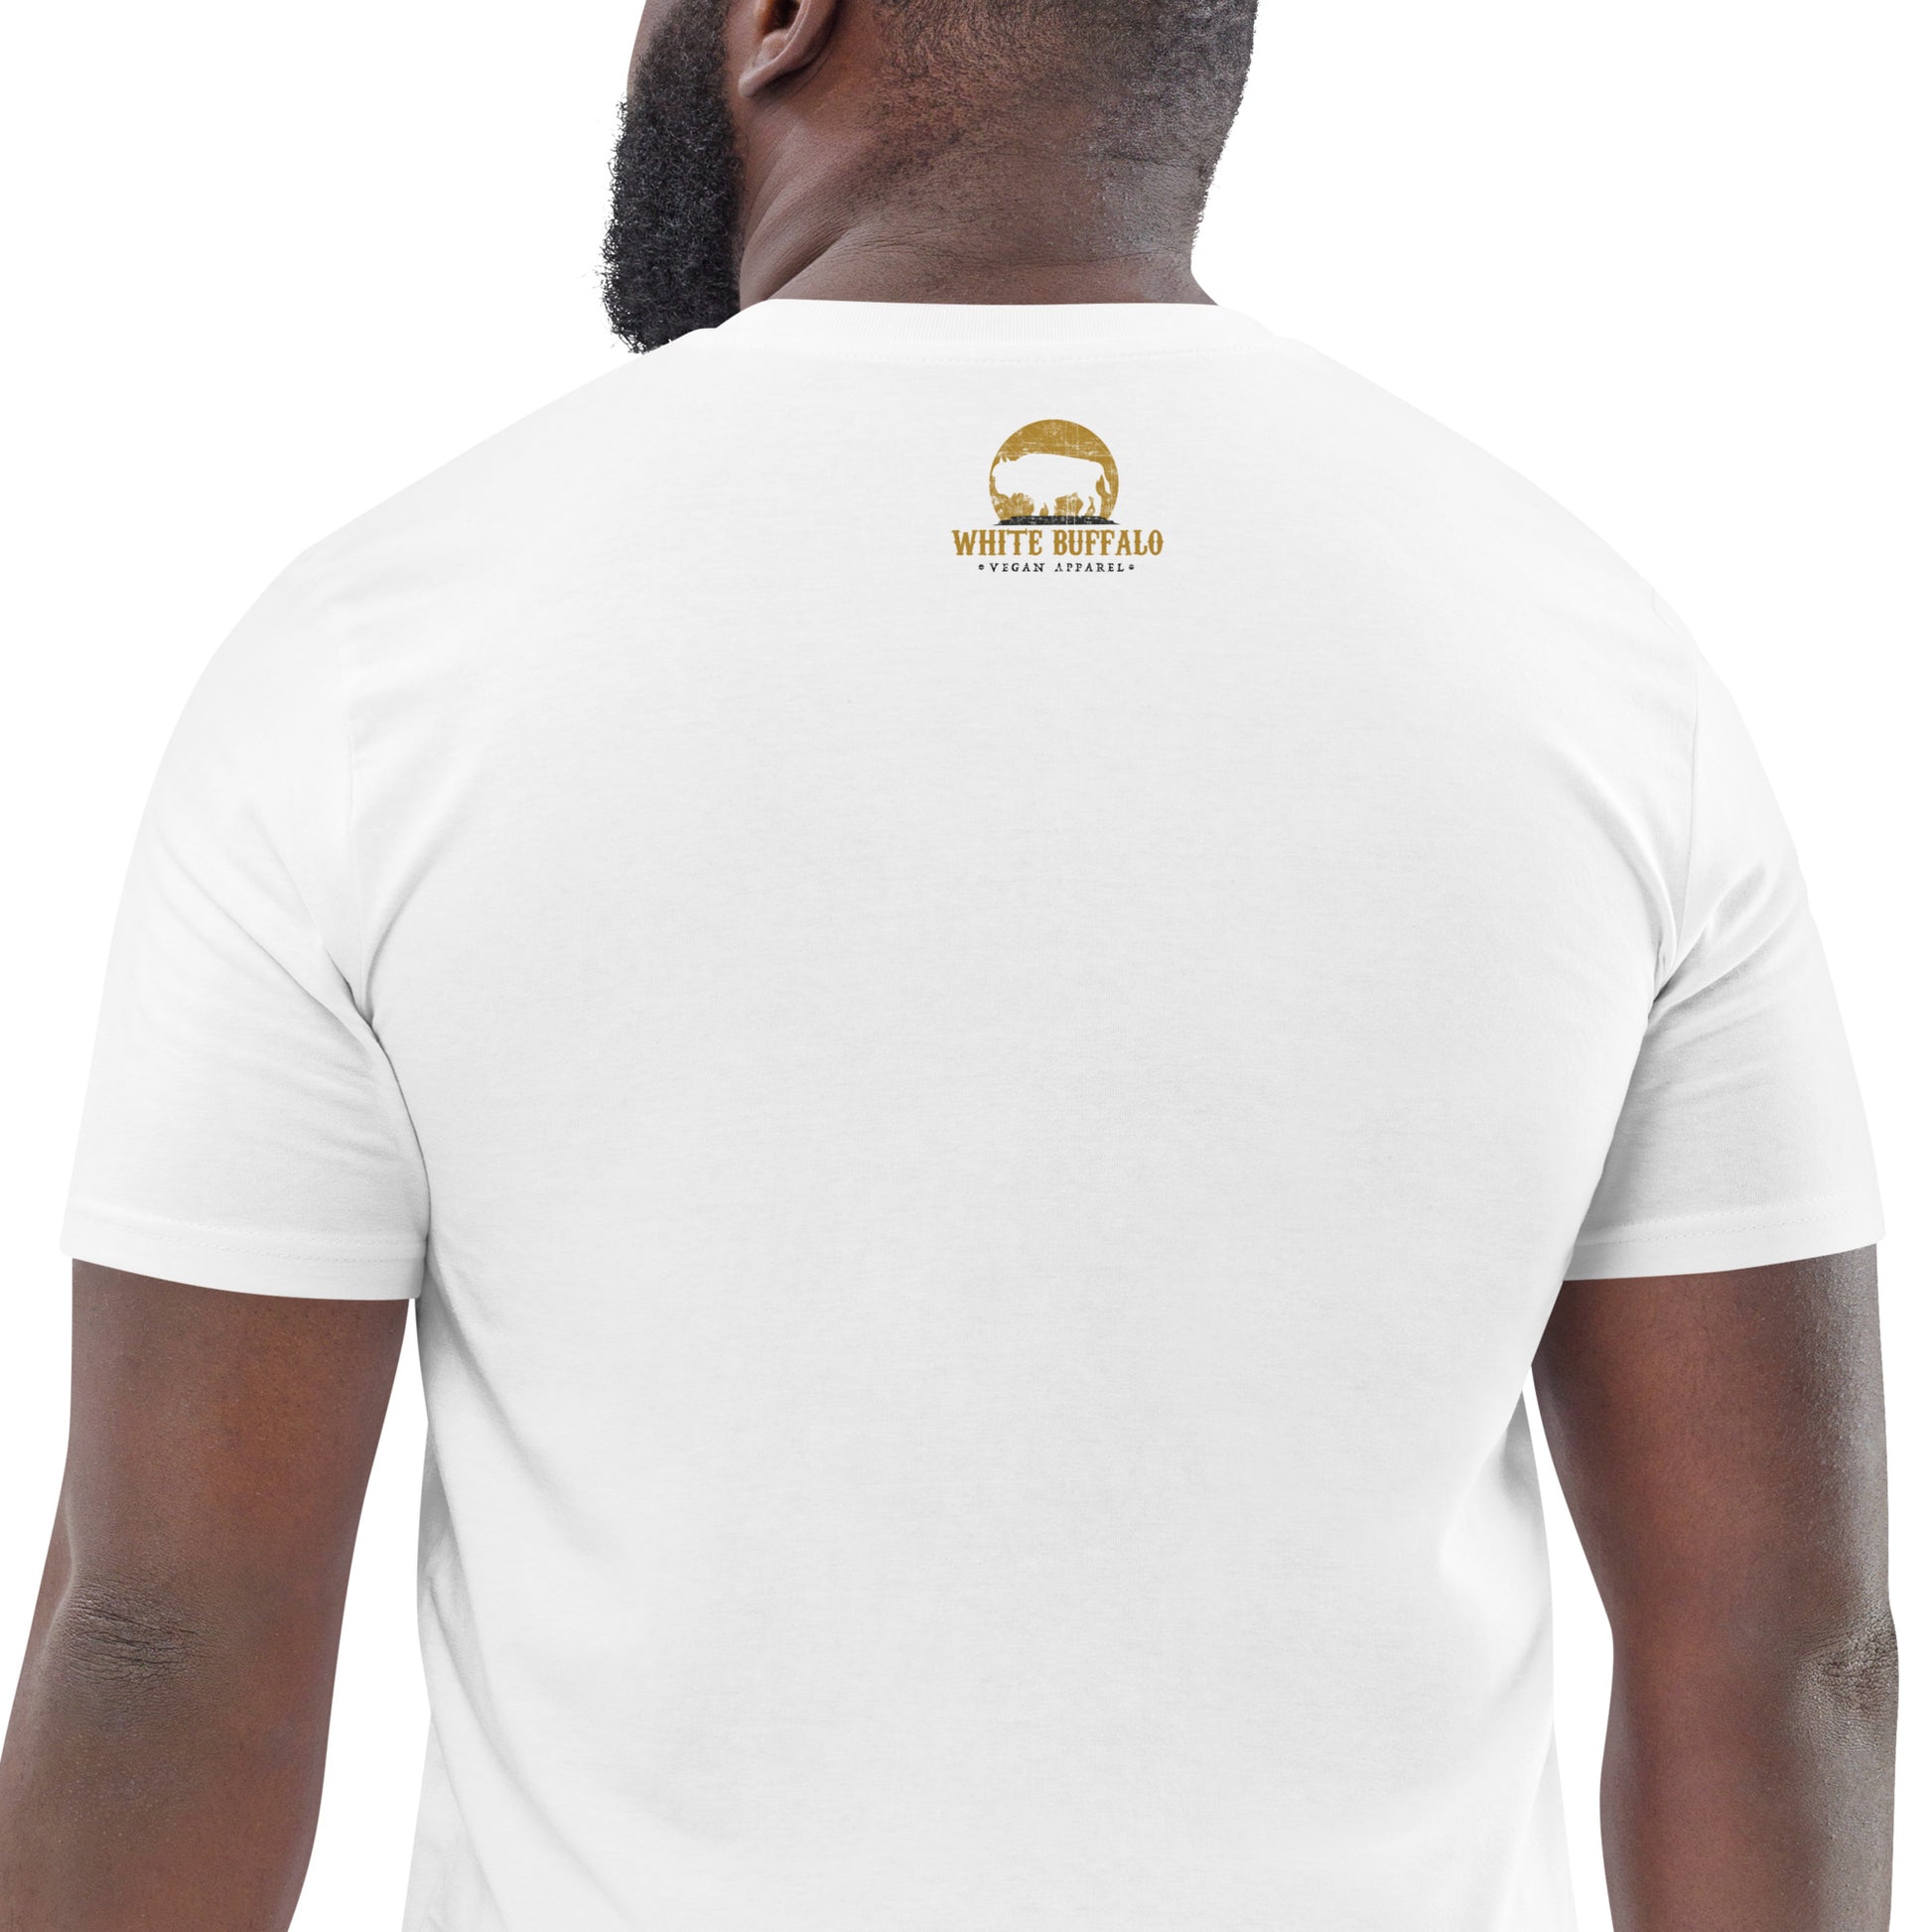 white buffalo vegan apparel logo printed on back of white shirt